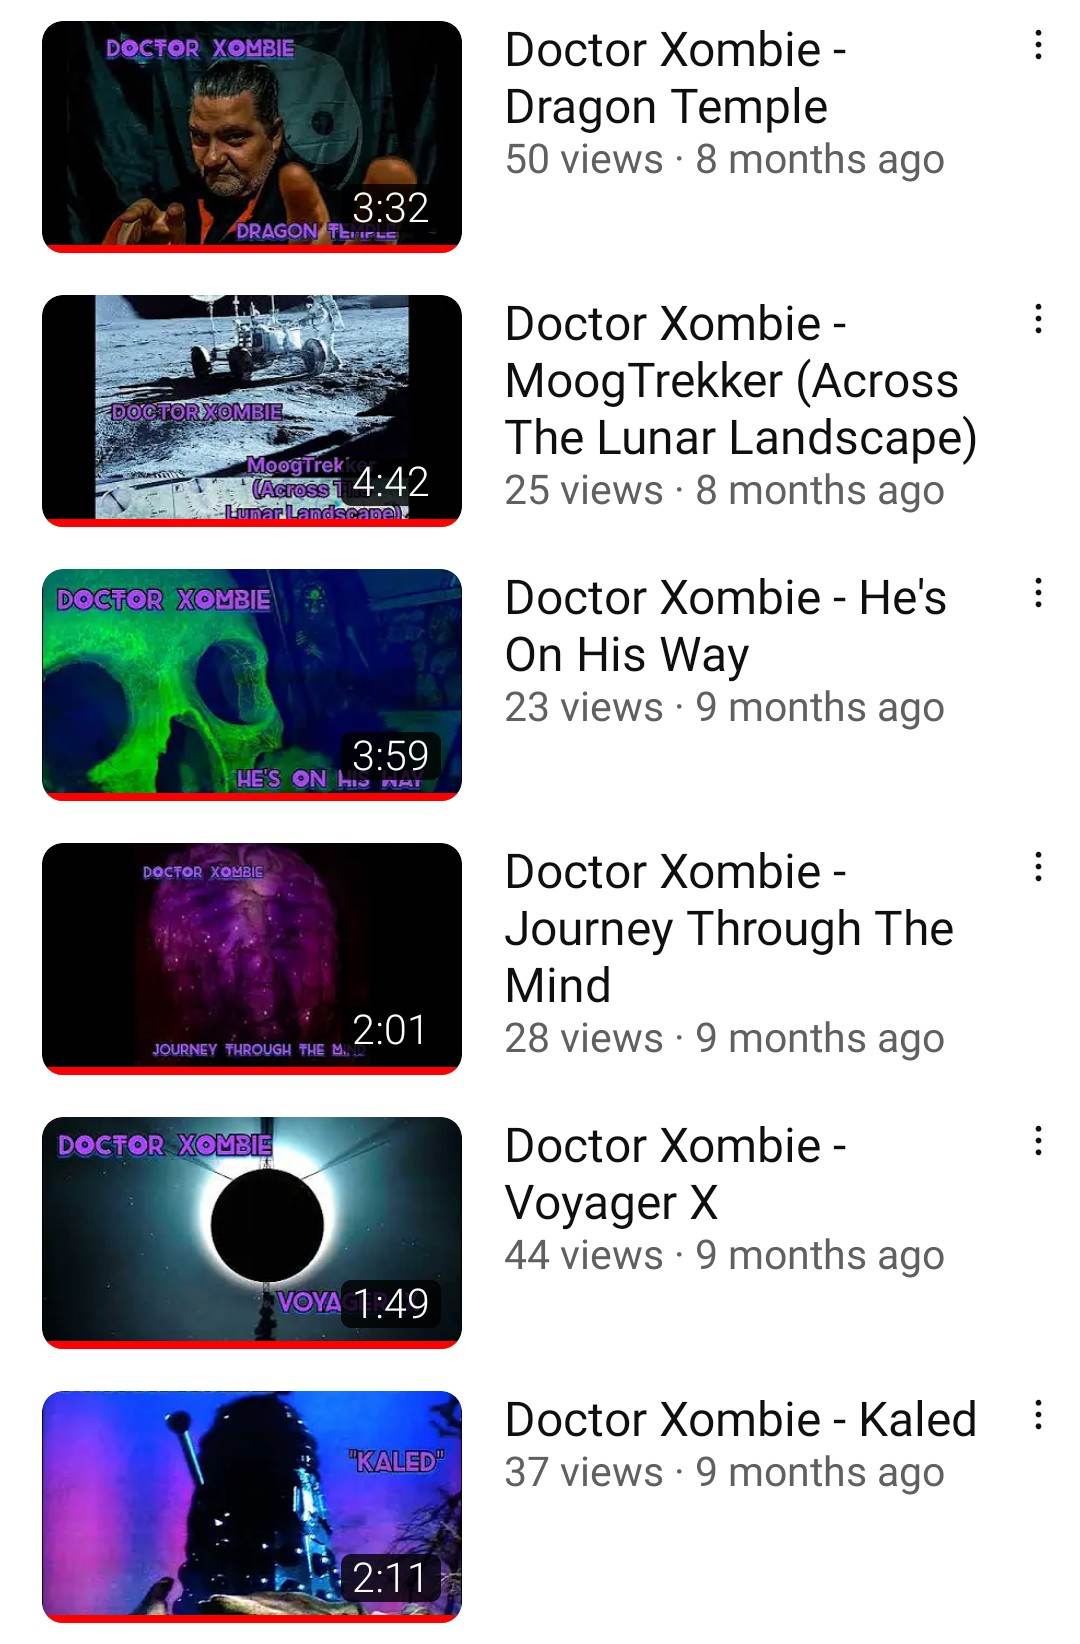 Doctor Xombie on YouTube